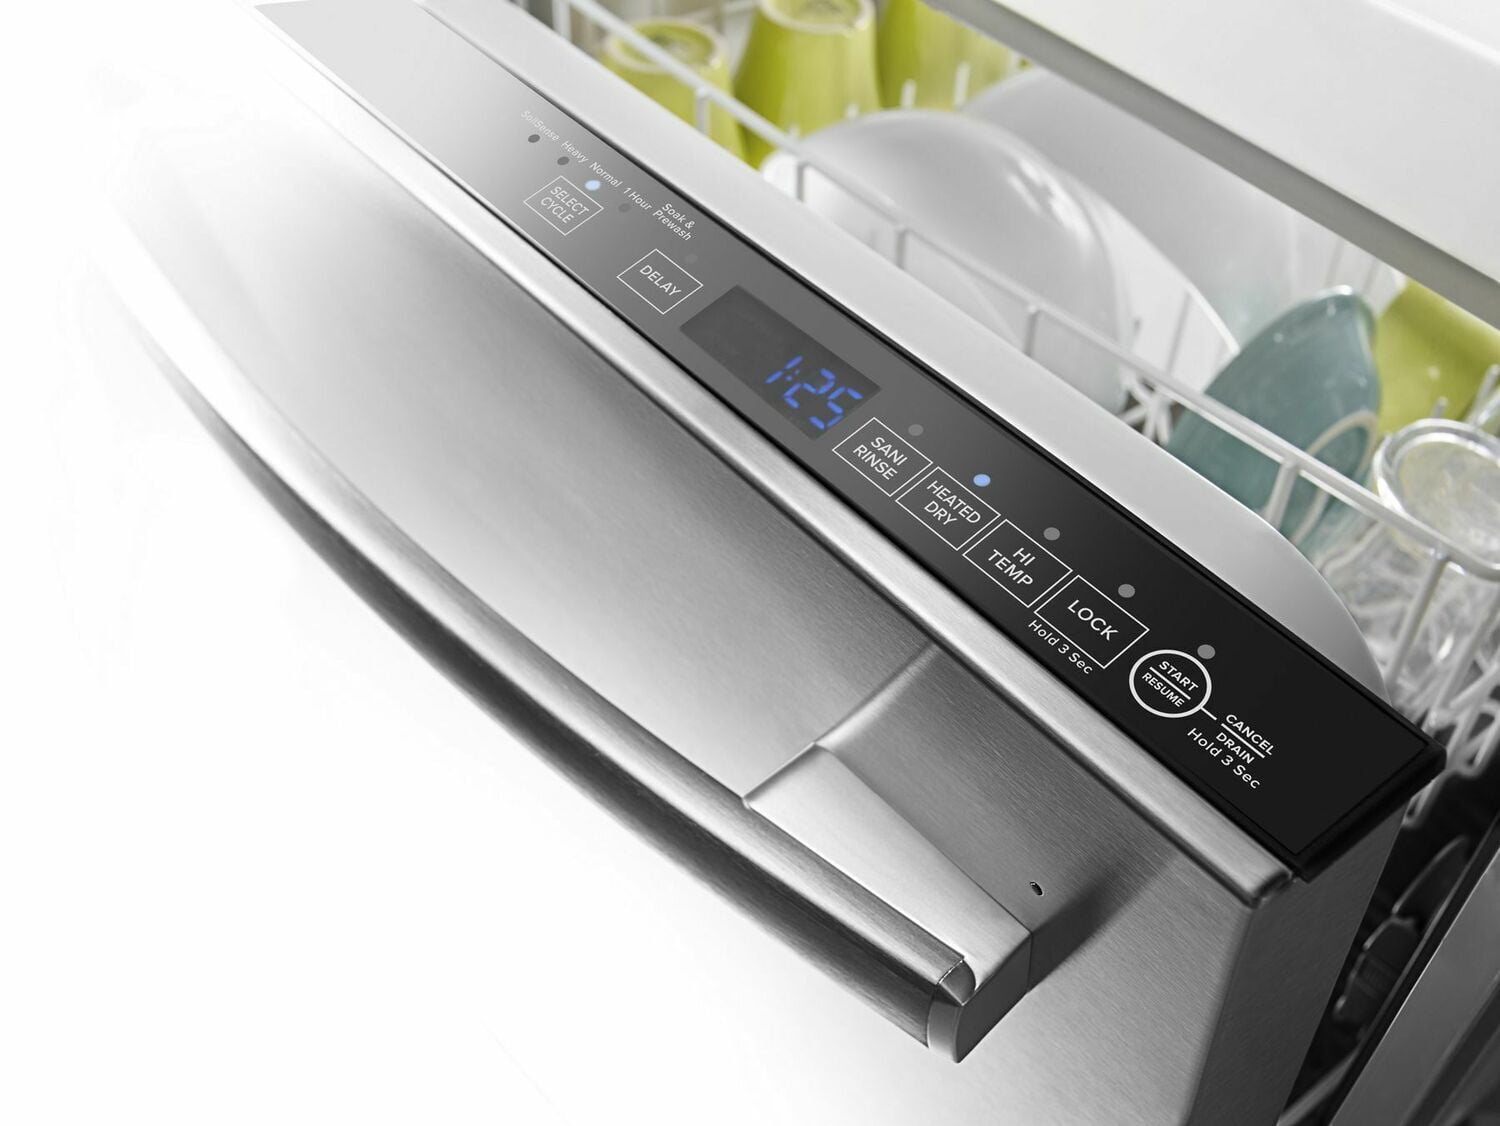 Amana ADB1500ADS Dishwasher With Soilsense Cycle - Stainless Steel